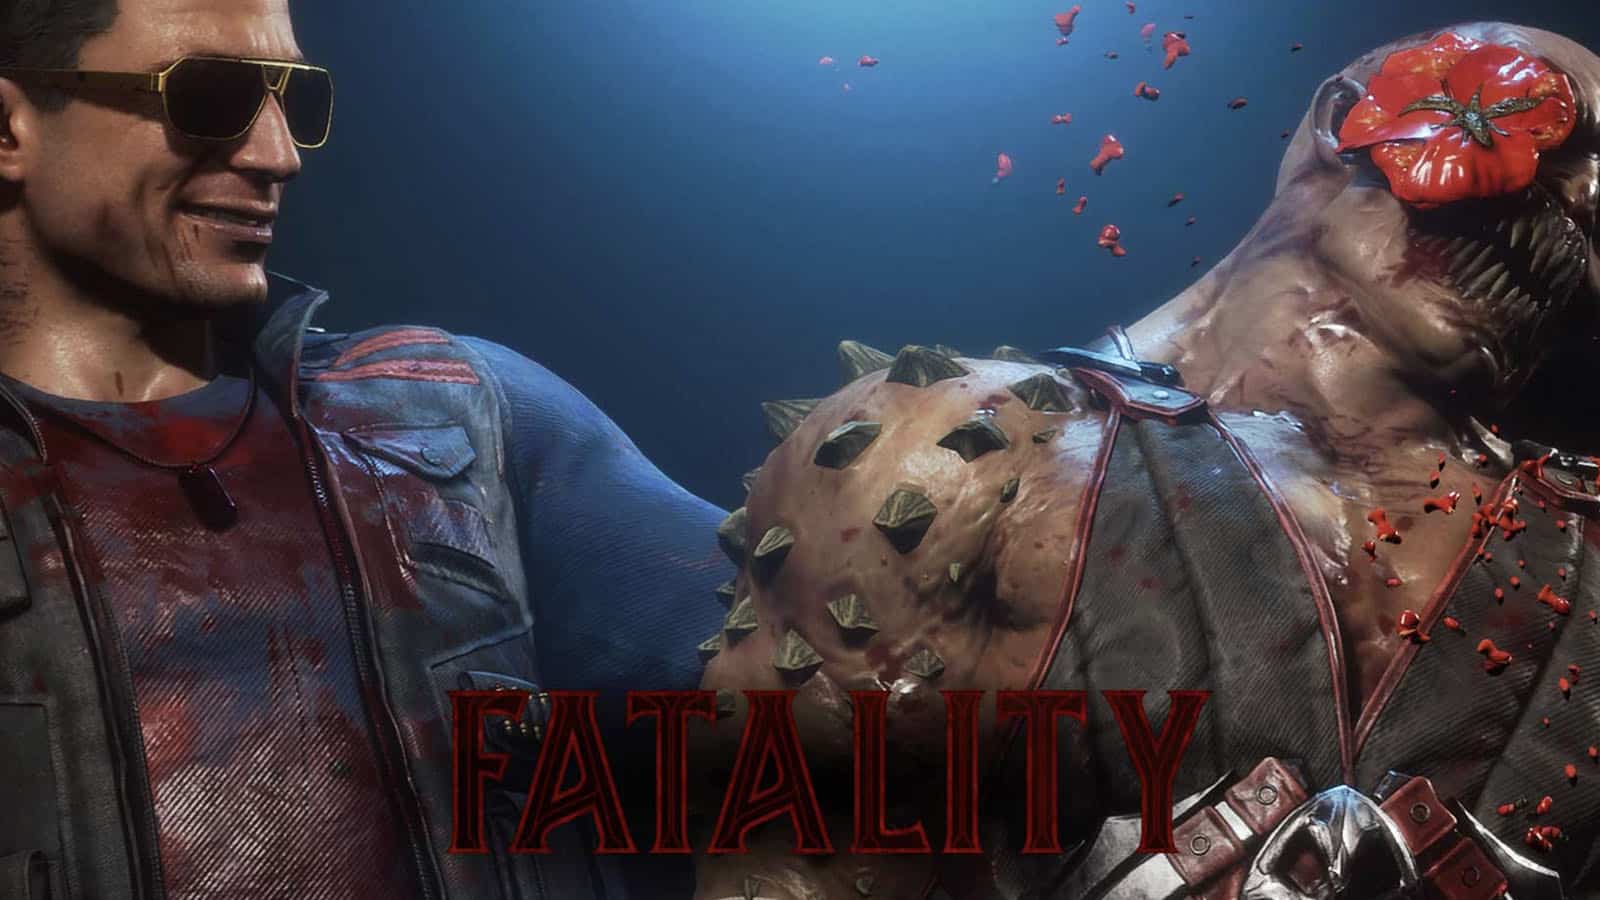 Mortal Kombat 11 Sindel Fatality Input: How To Do MK11 Sindel Fatalities